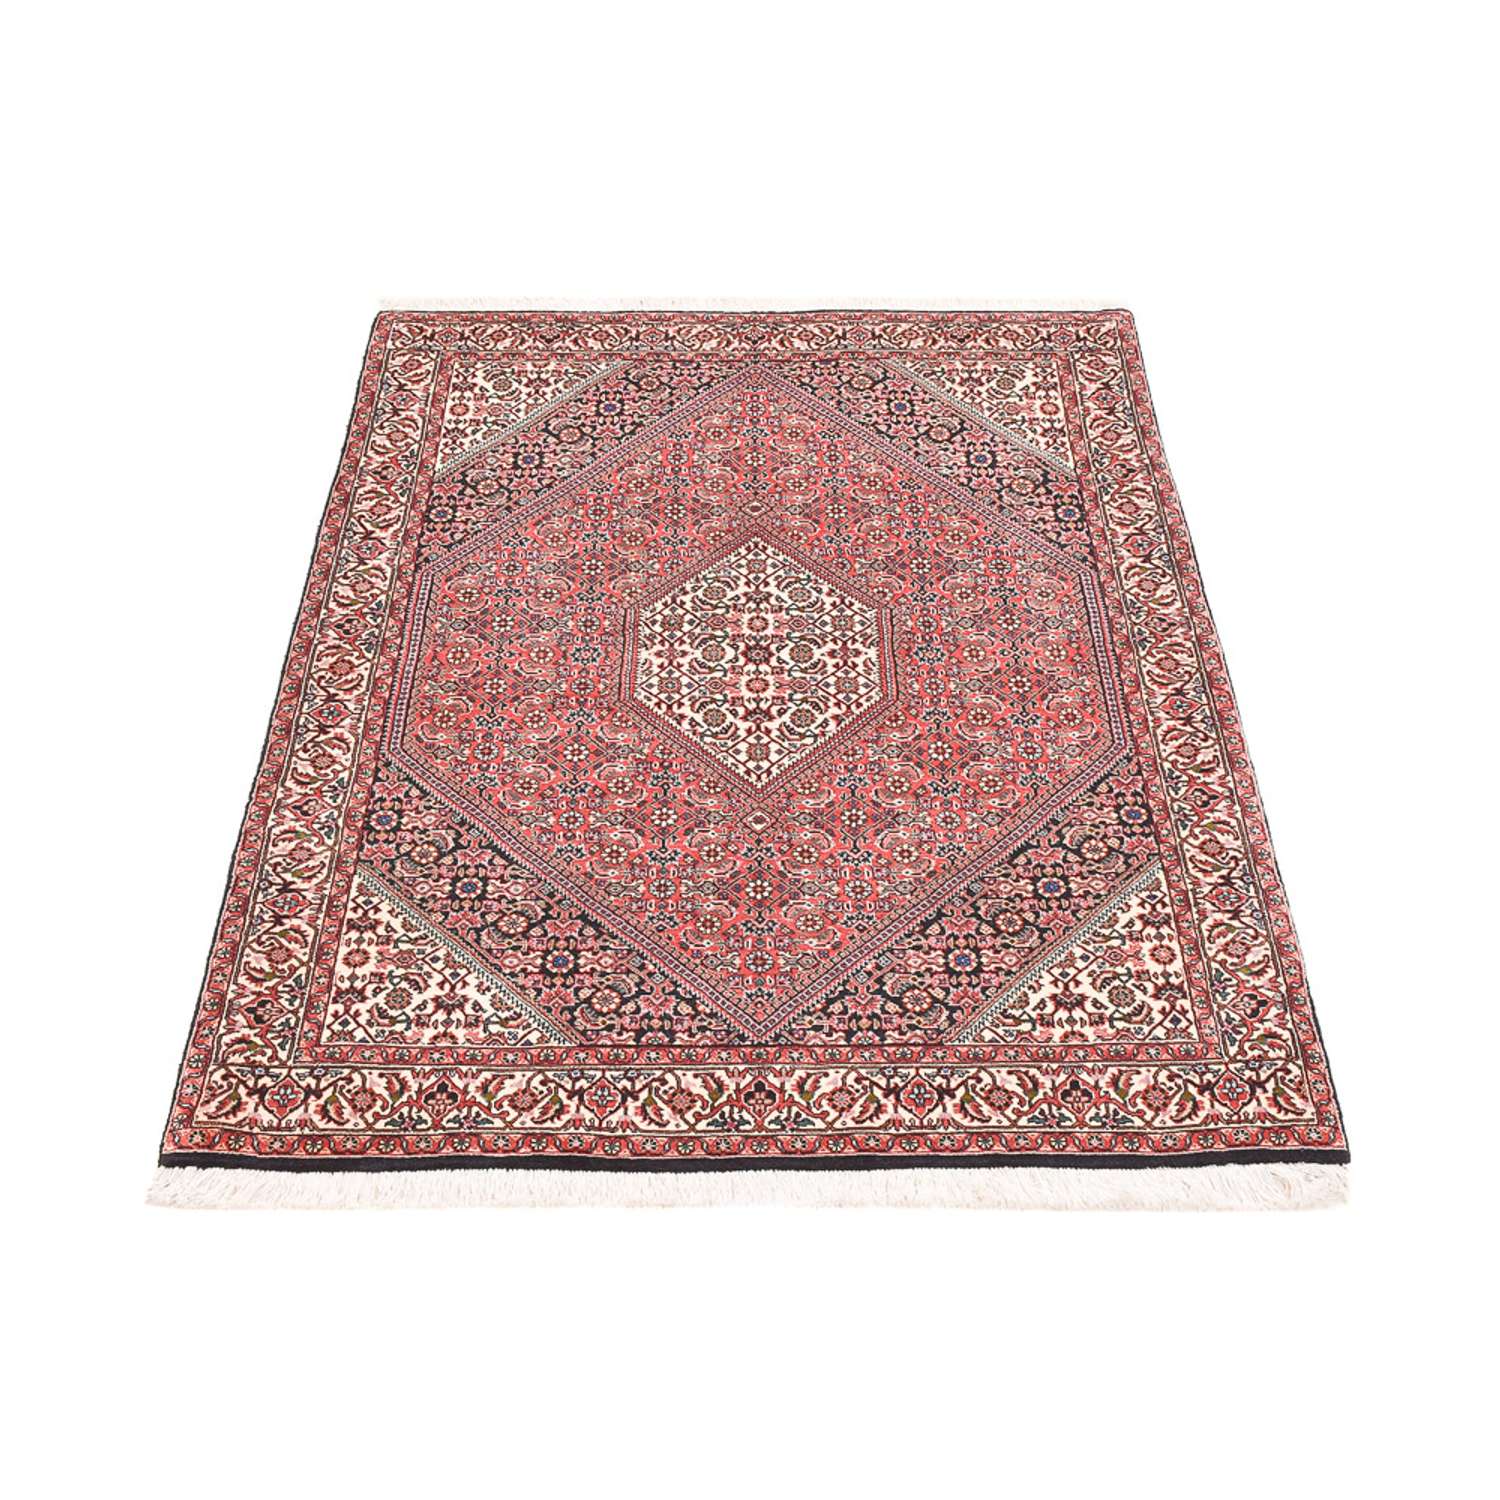 Perzisch tapijt - Bijar - 156 x 110 cm - licht rood